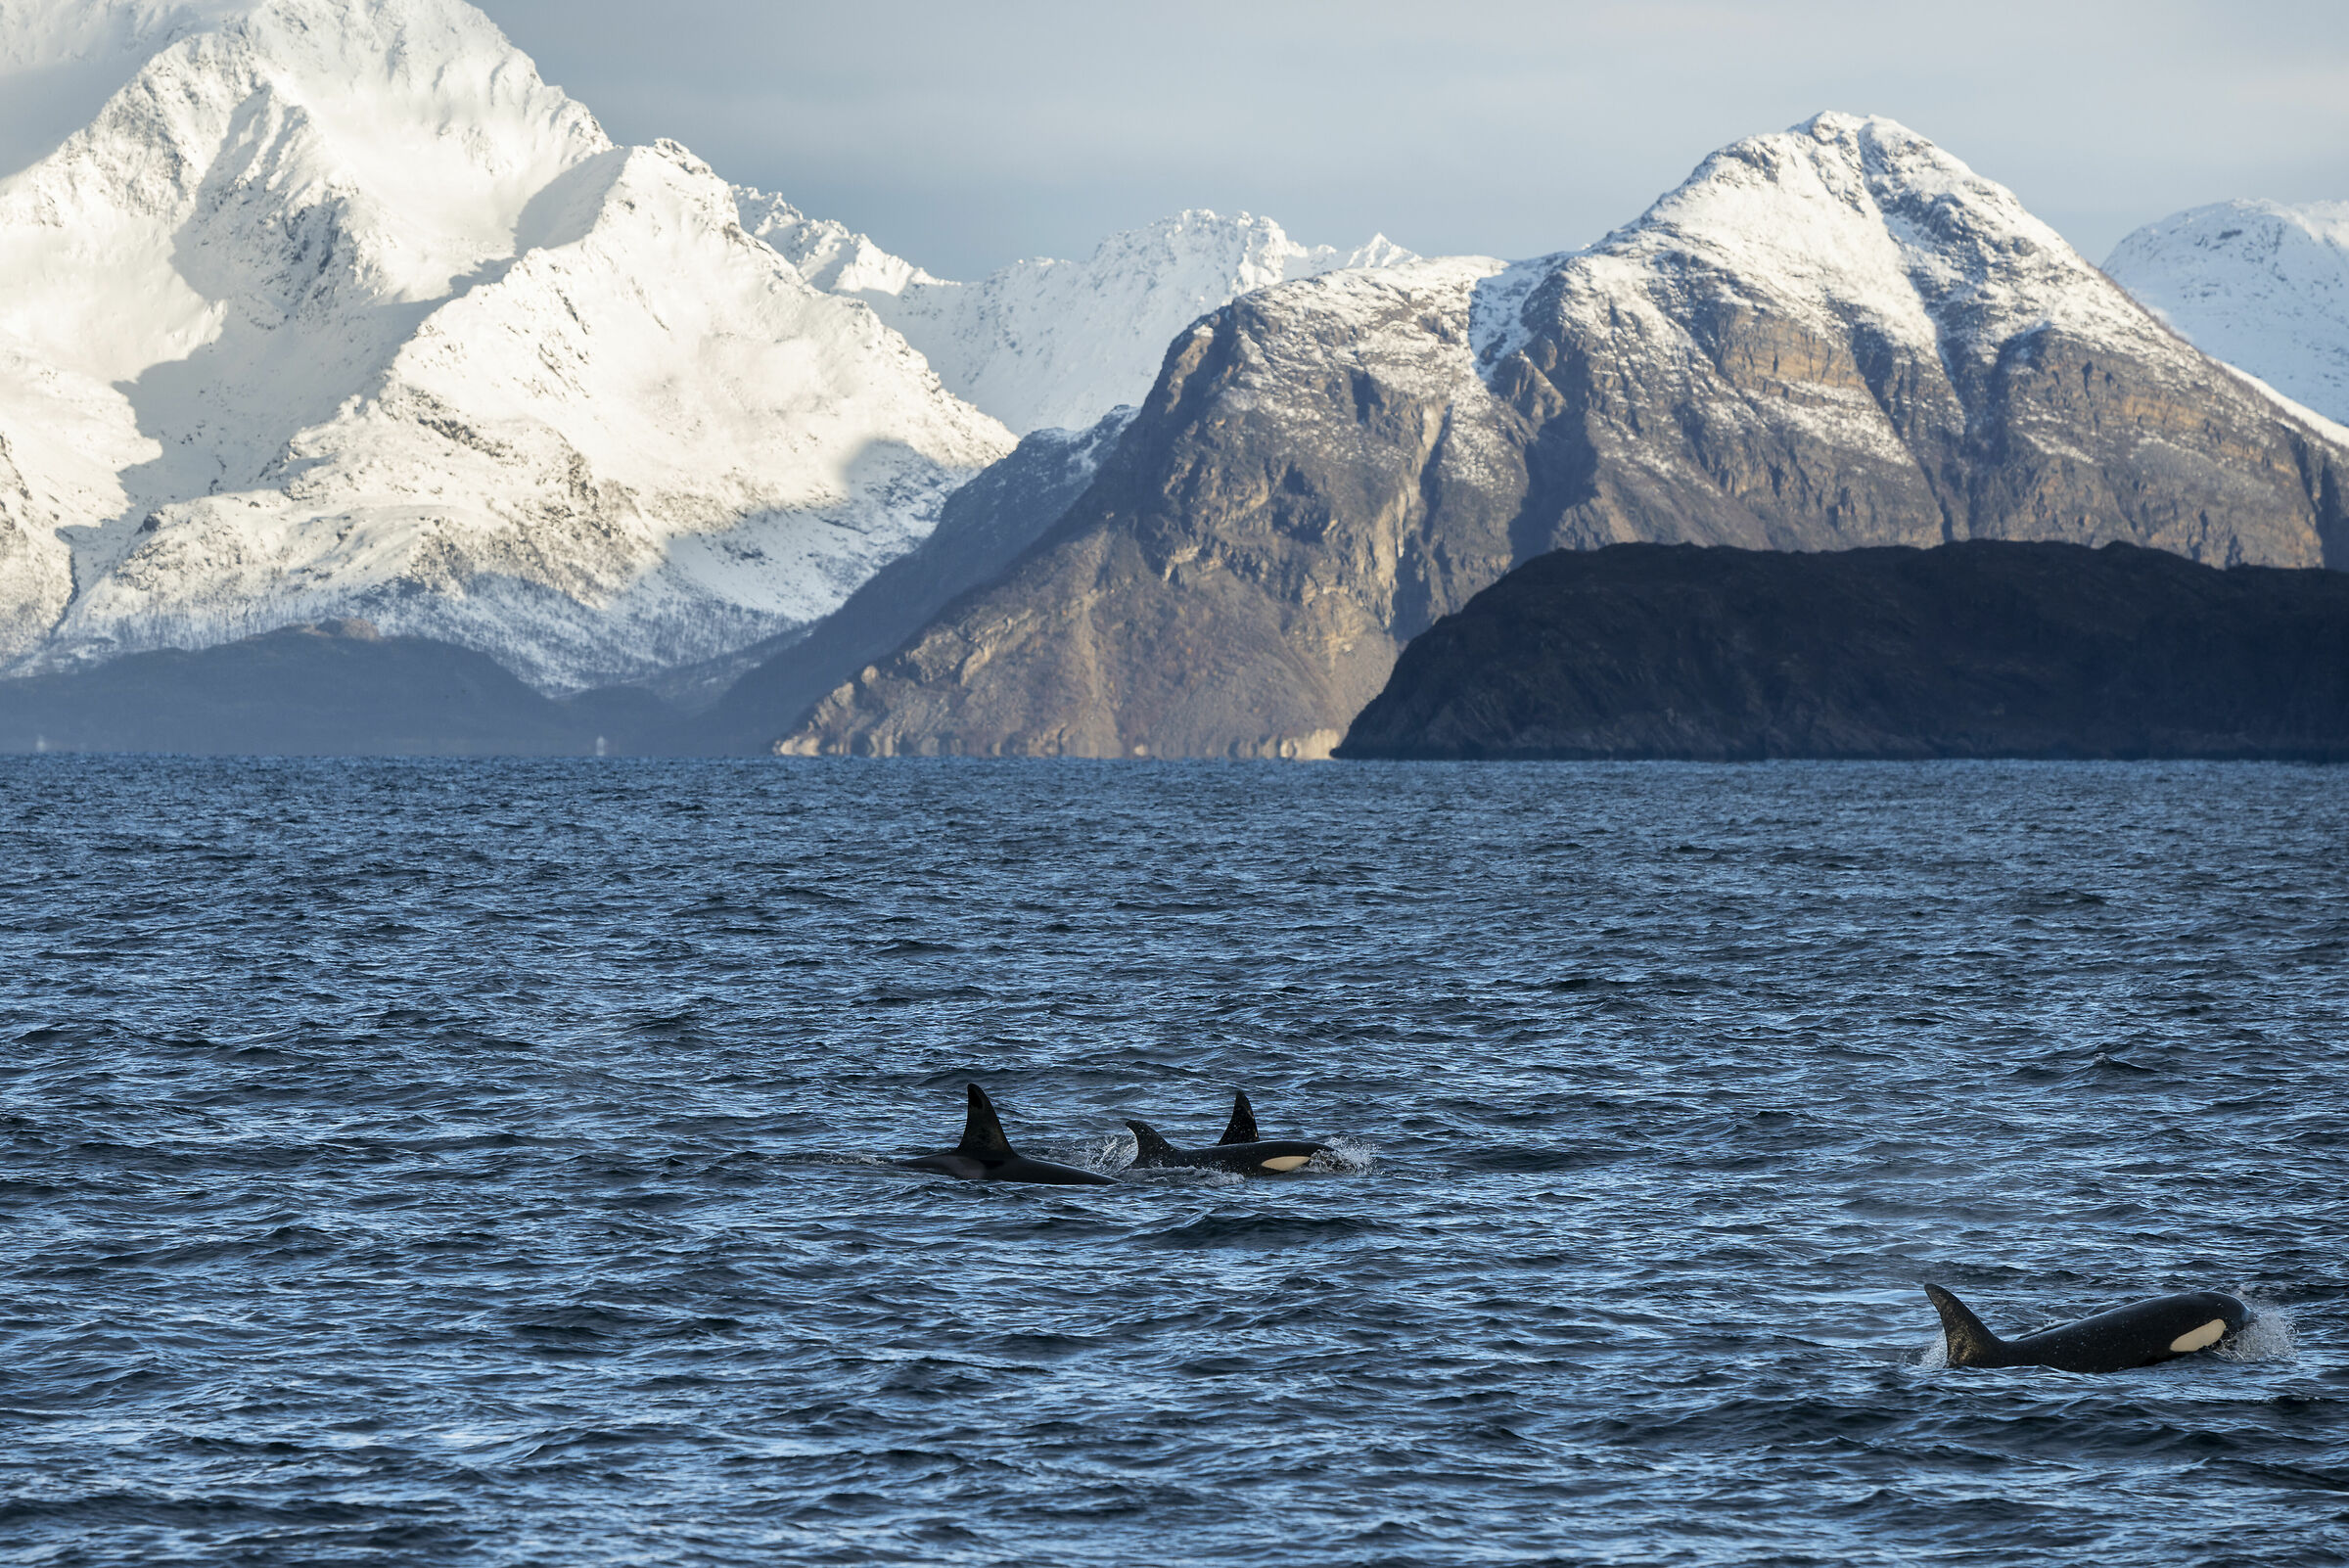 Orcas in the Norwegian fjords...